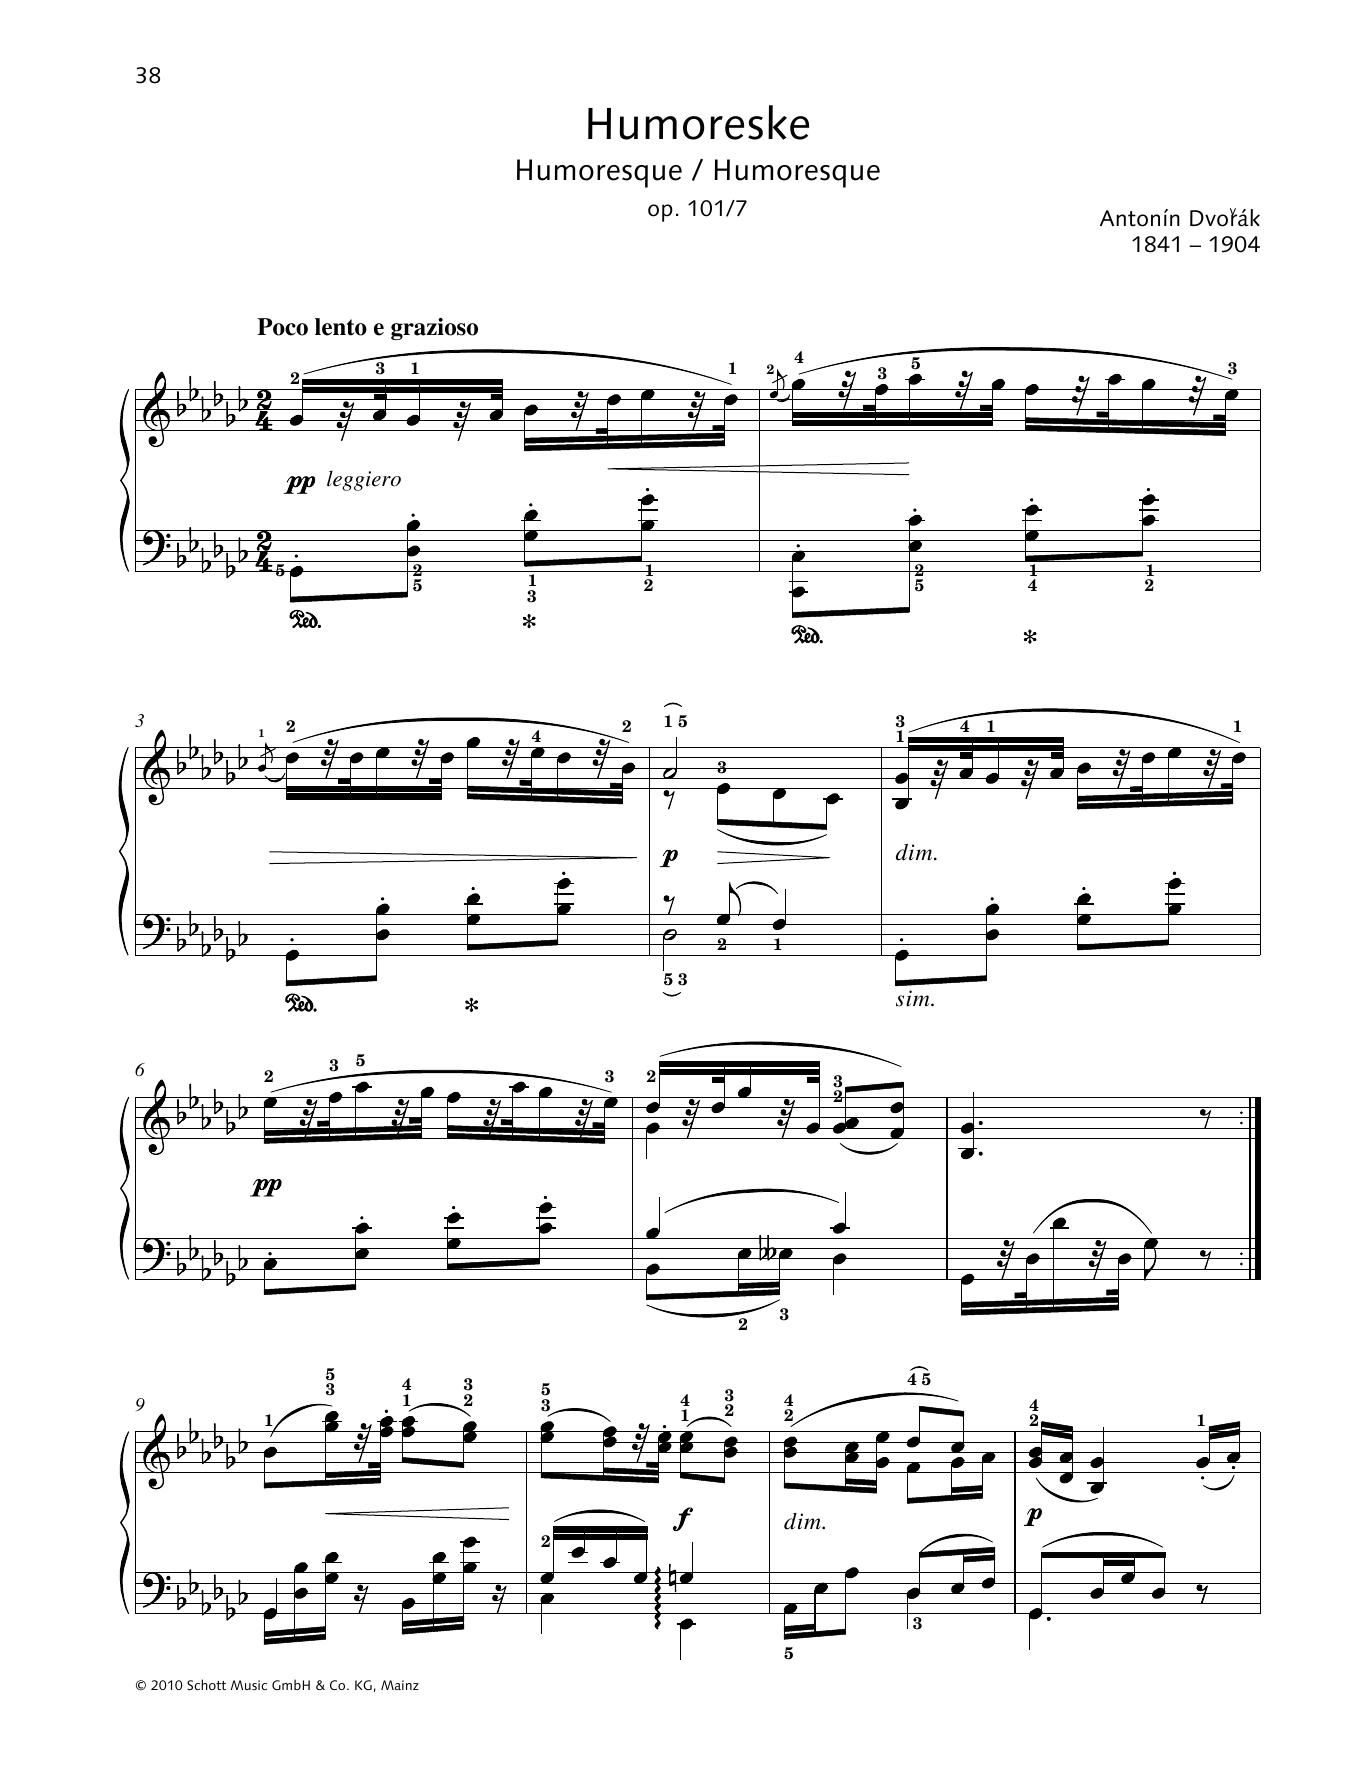 Antonín Dvorák Humoreske Sheet Music Notes & Chords for Piano Solo - Download or Print PDF